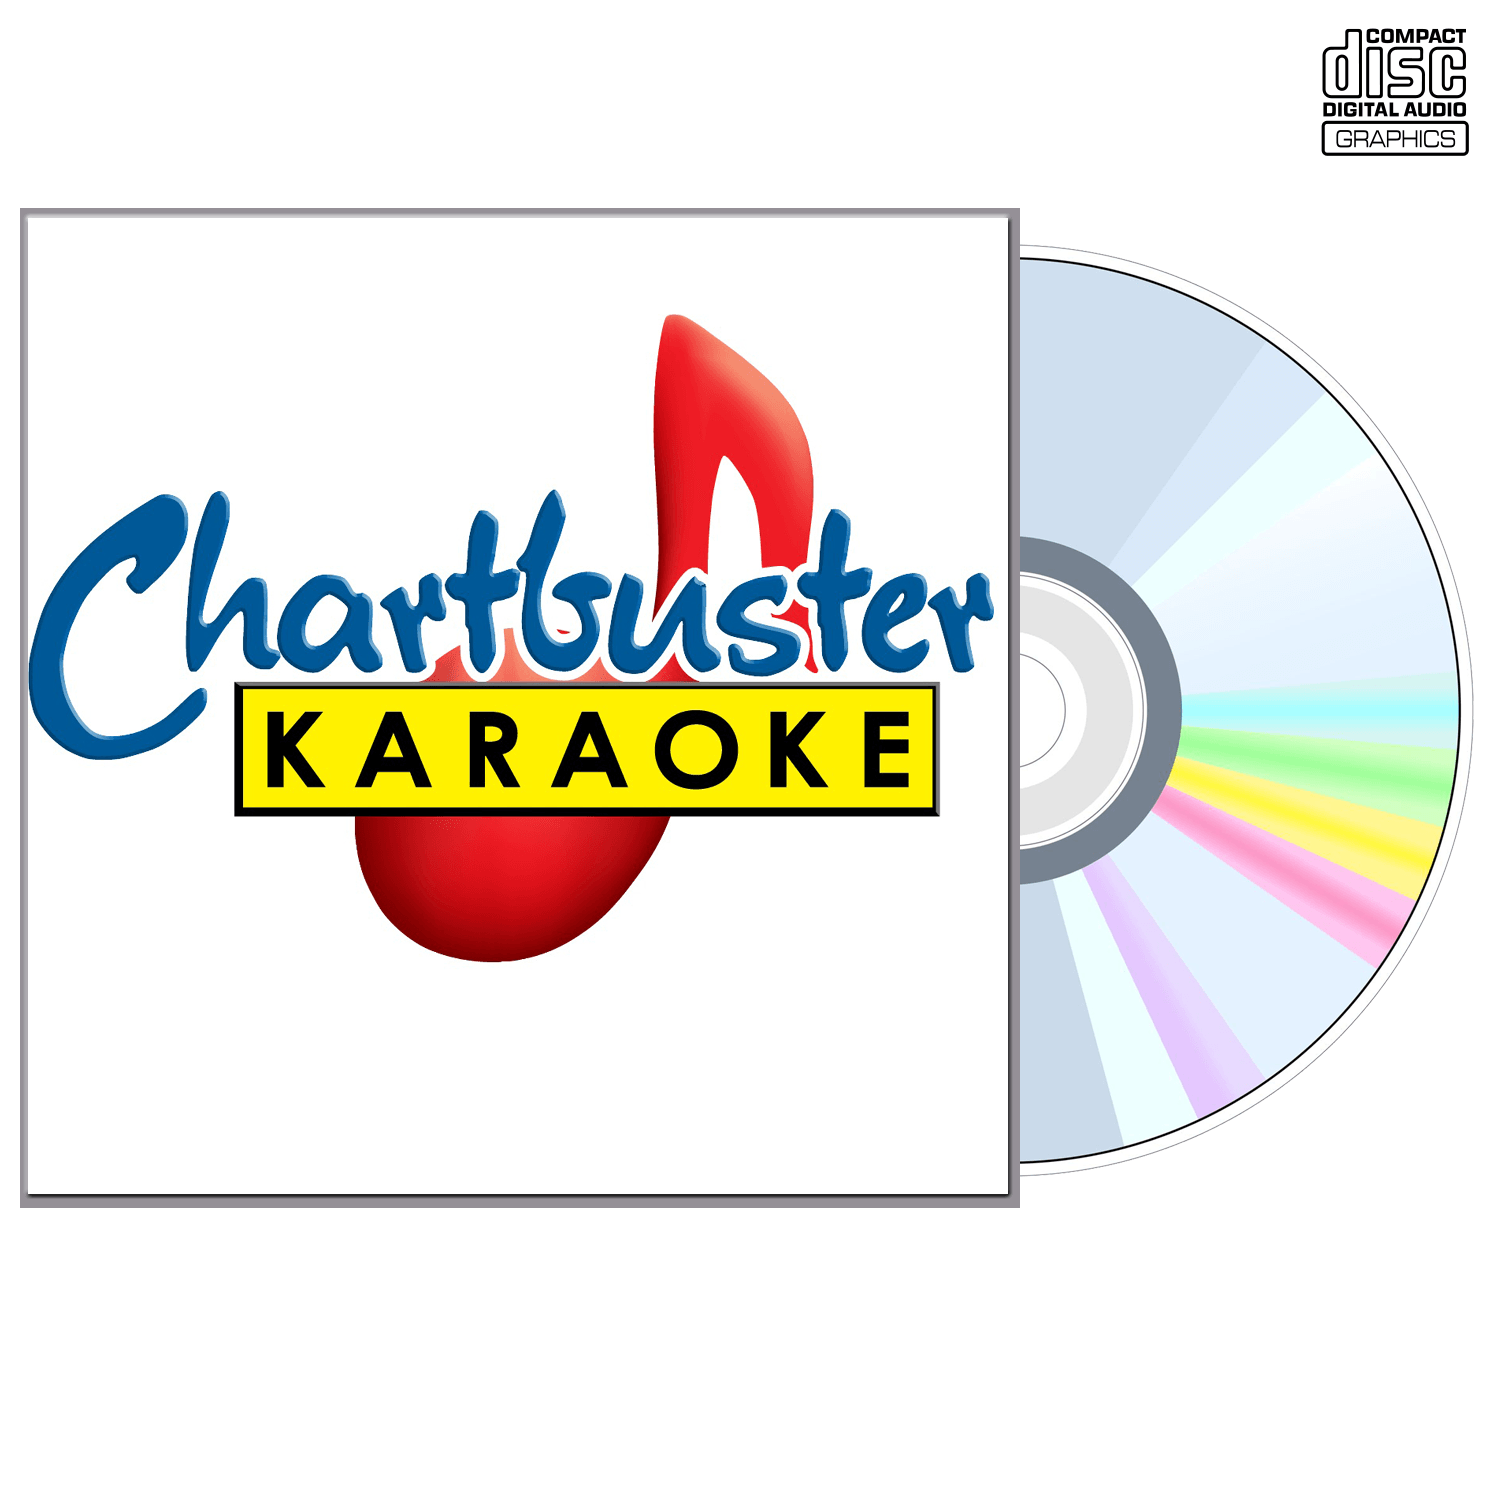 70's Collection Vol 05 - CD+G - Chartbuster Karaoke - Karaoke Home Entertainment